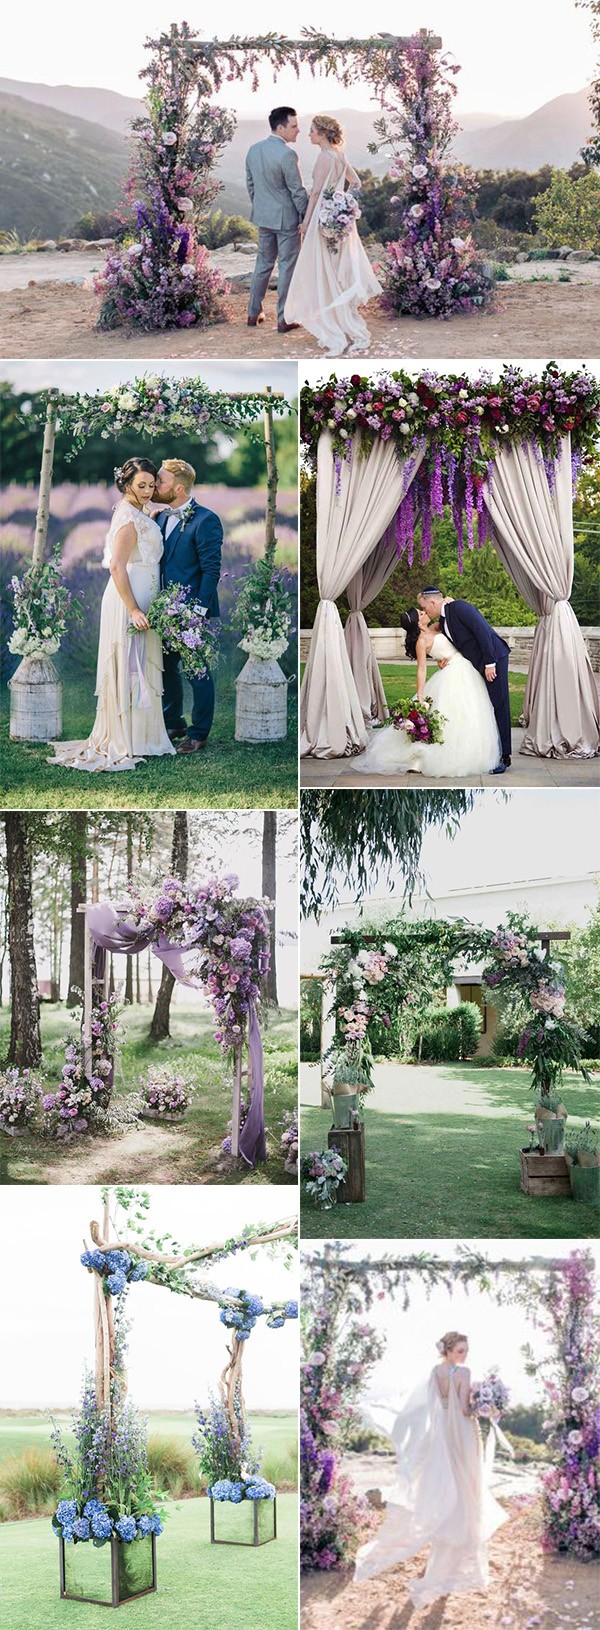 lavender wedding arch decoraiton ideas